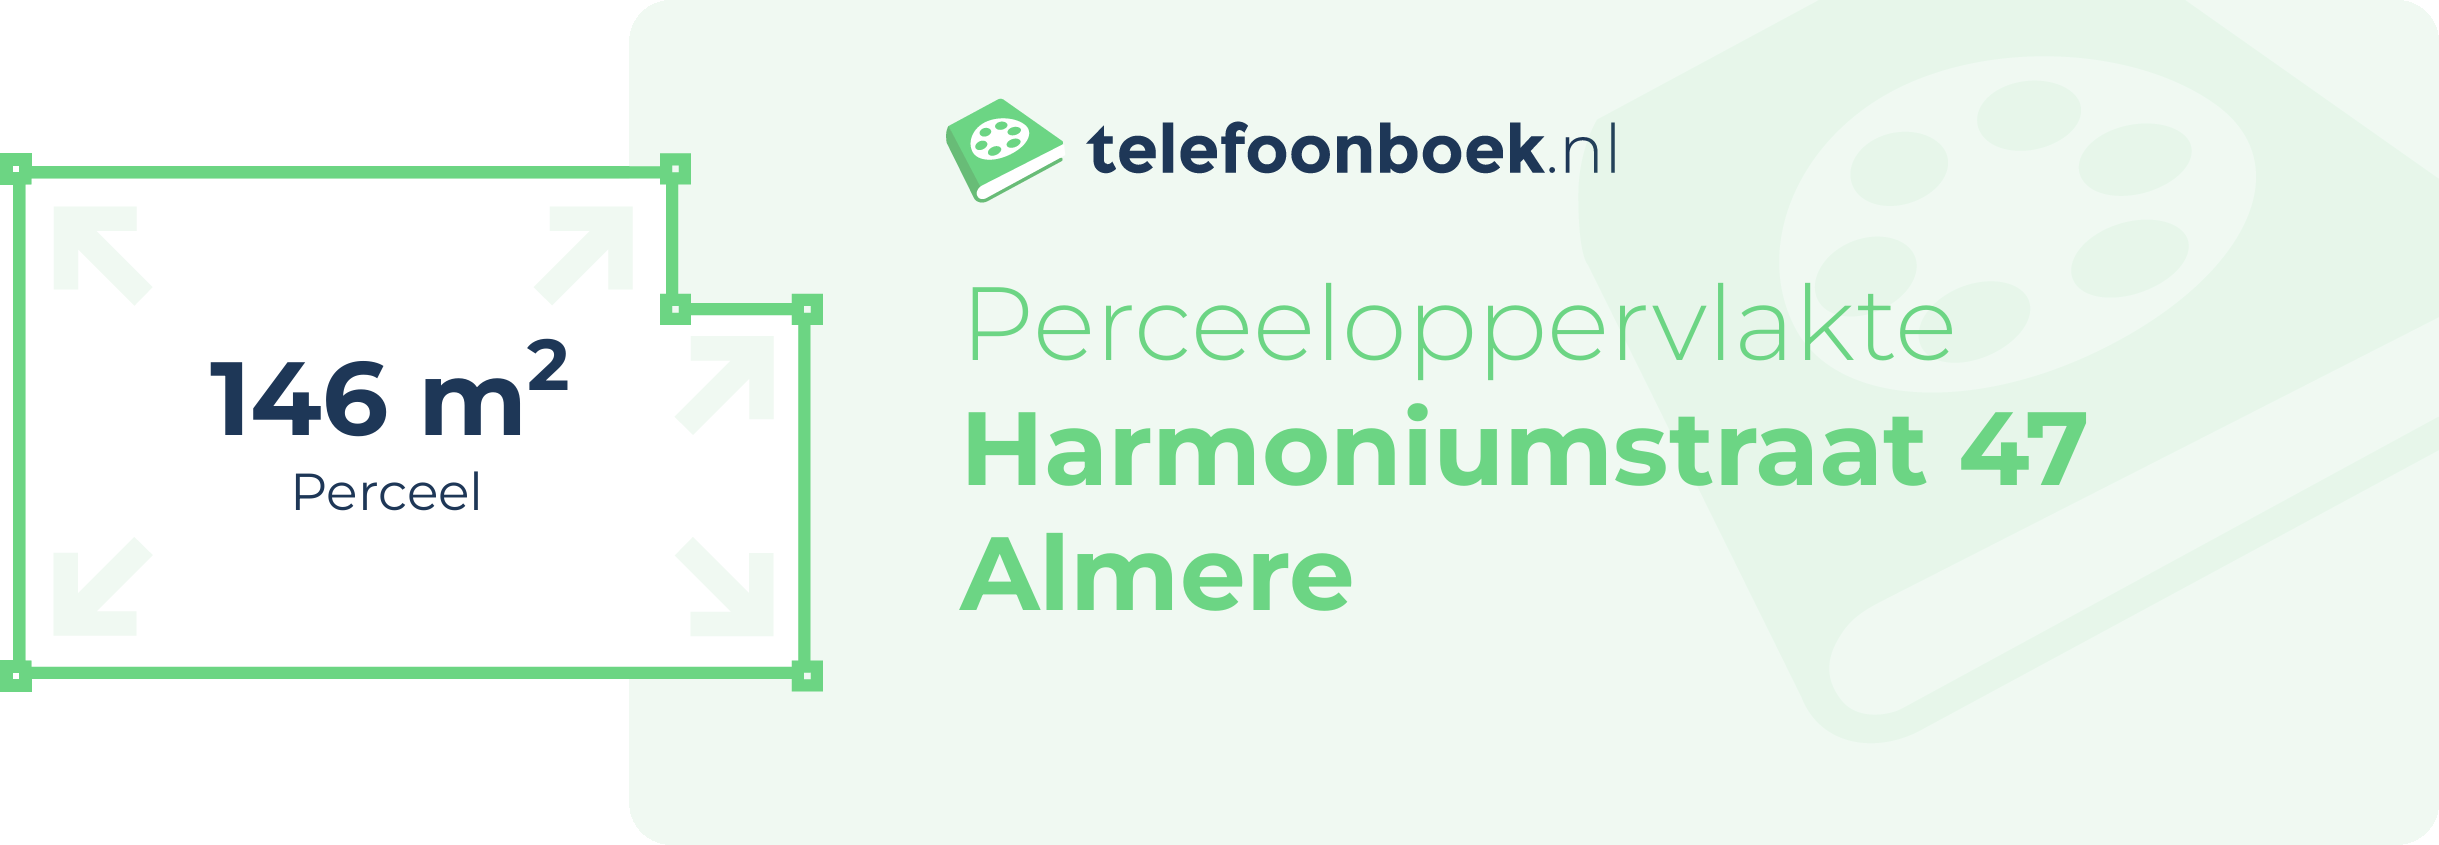 Perceeloppervlakte Harmoniumstraat 47 Almere